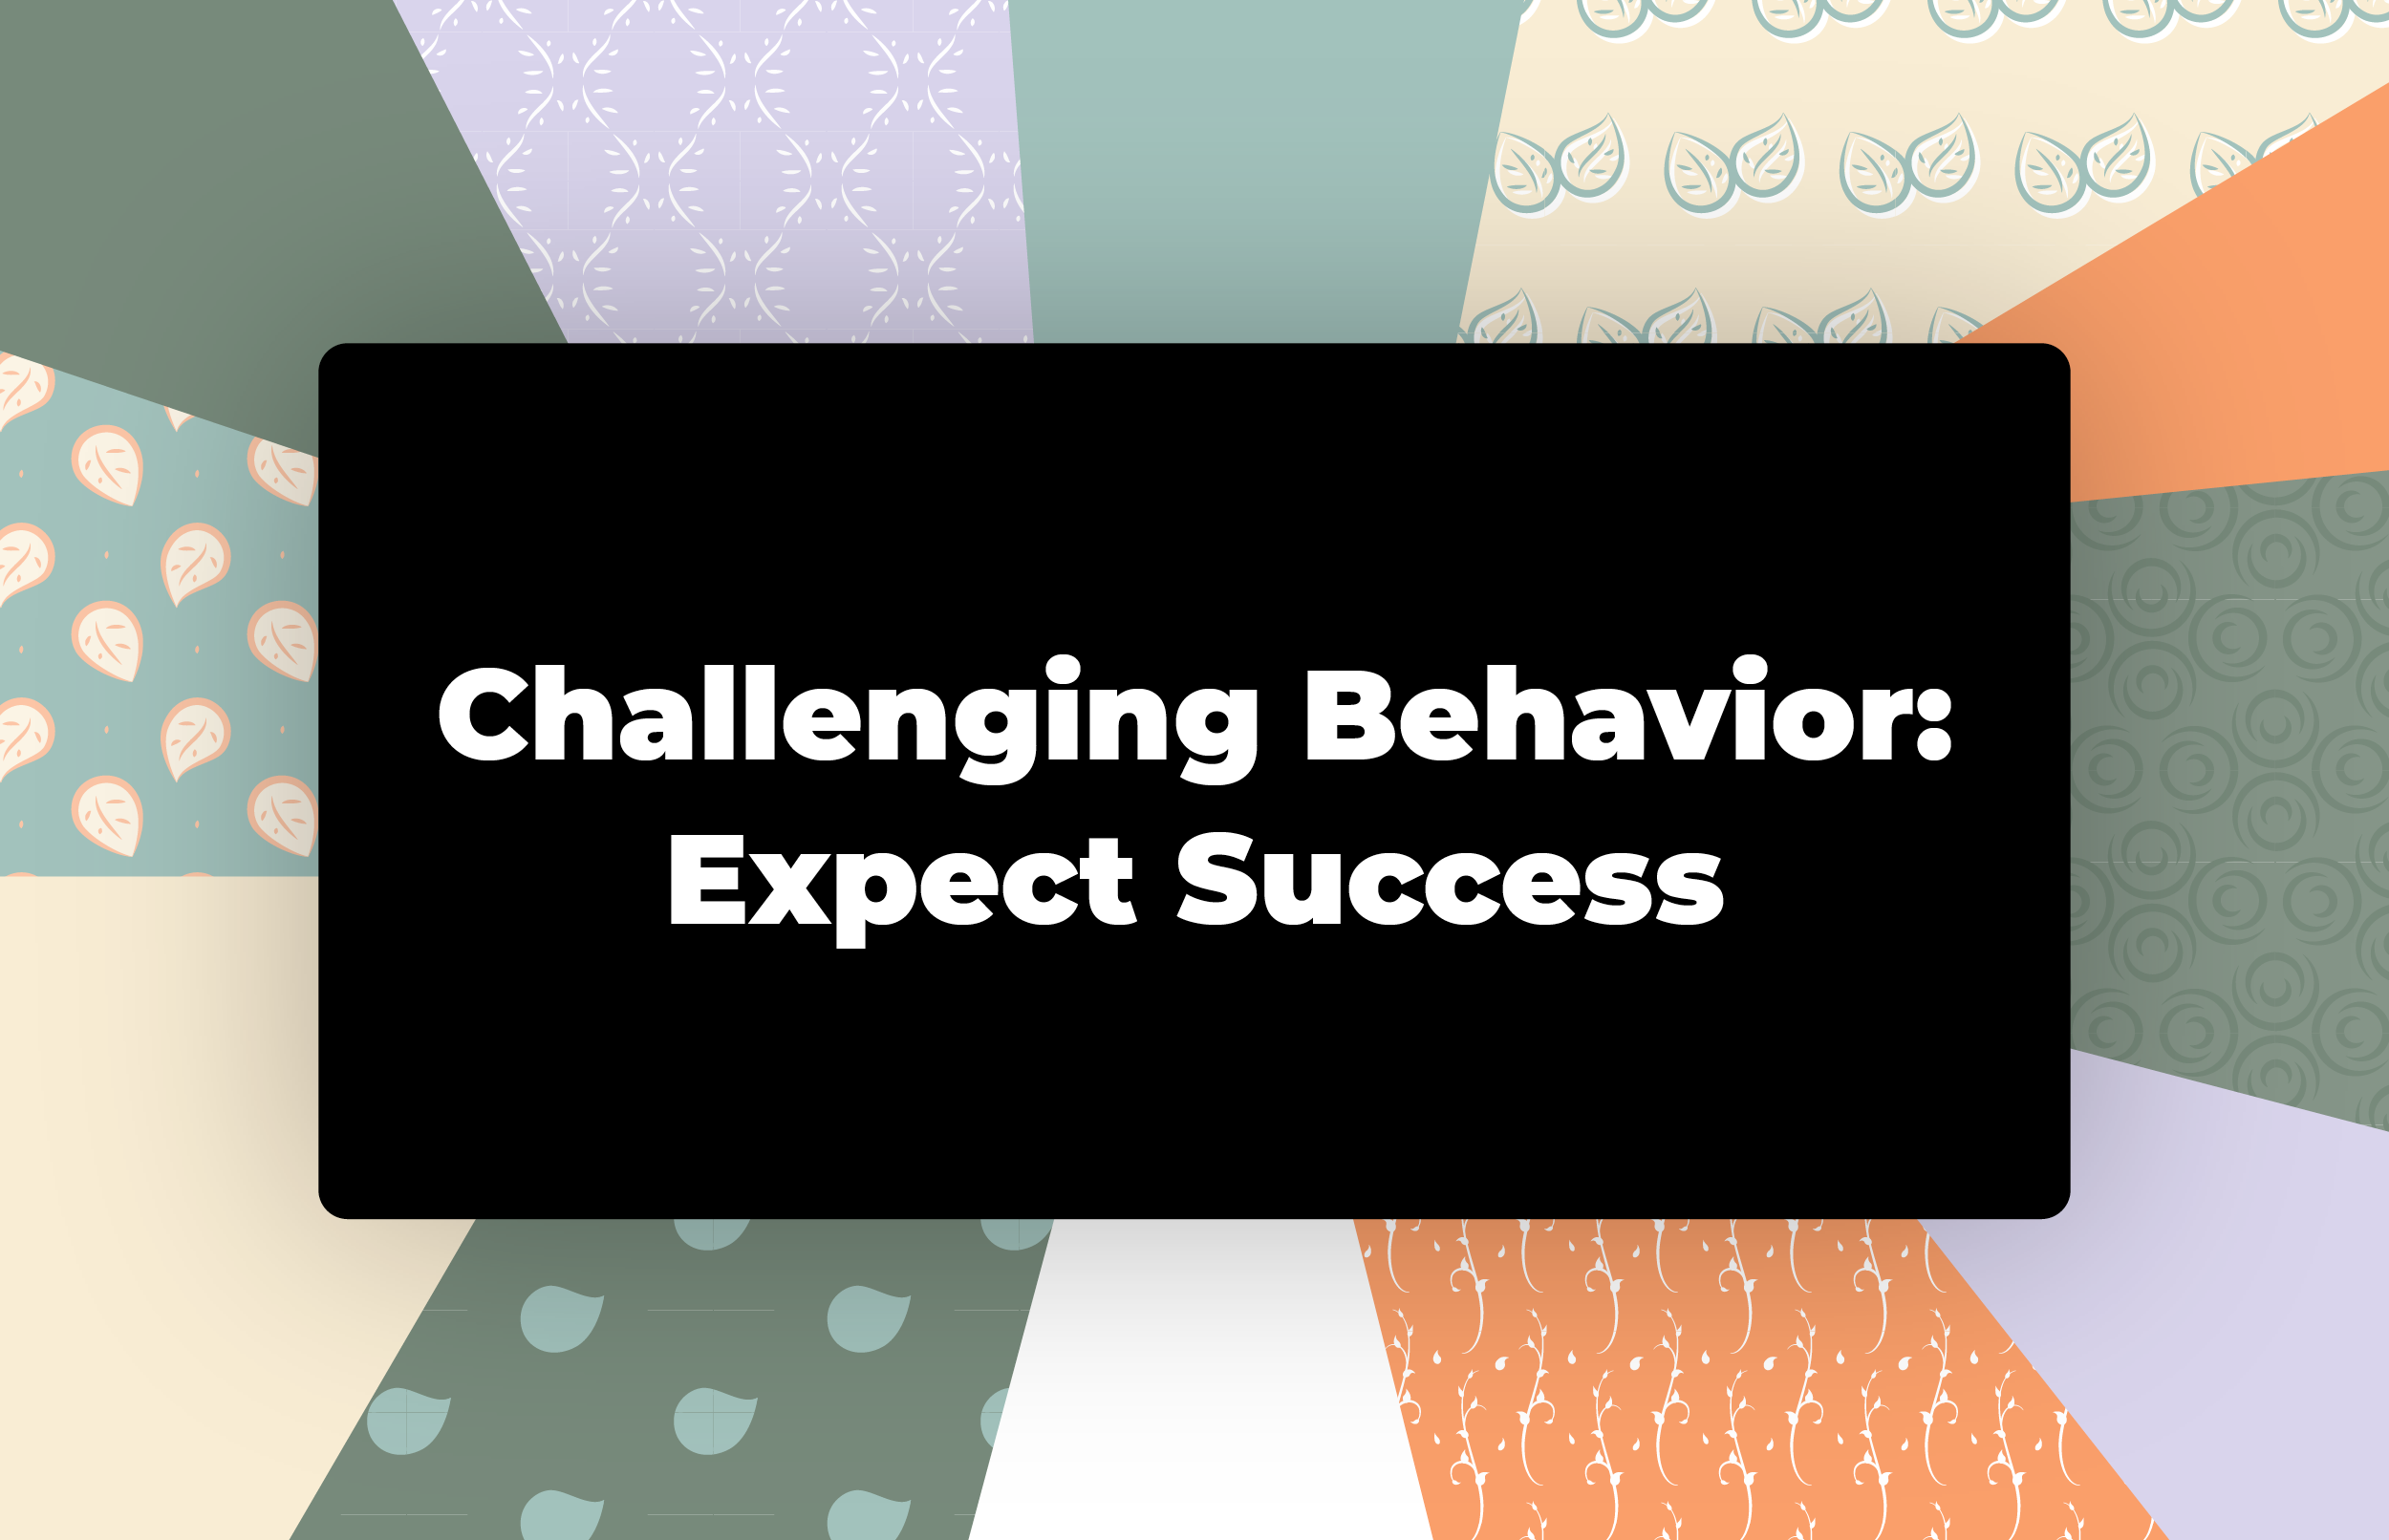 Challenging Behavior Project Image: Challenging Behavior: Expect Success